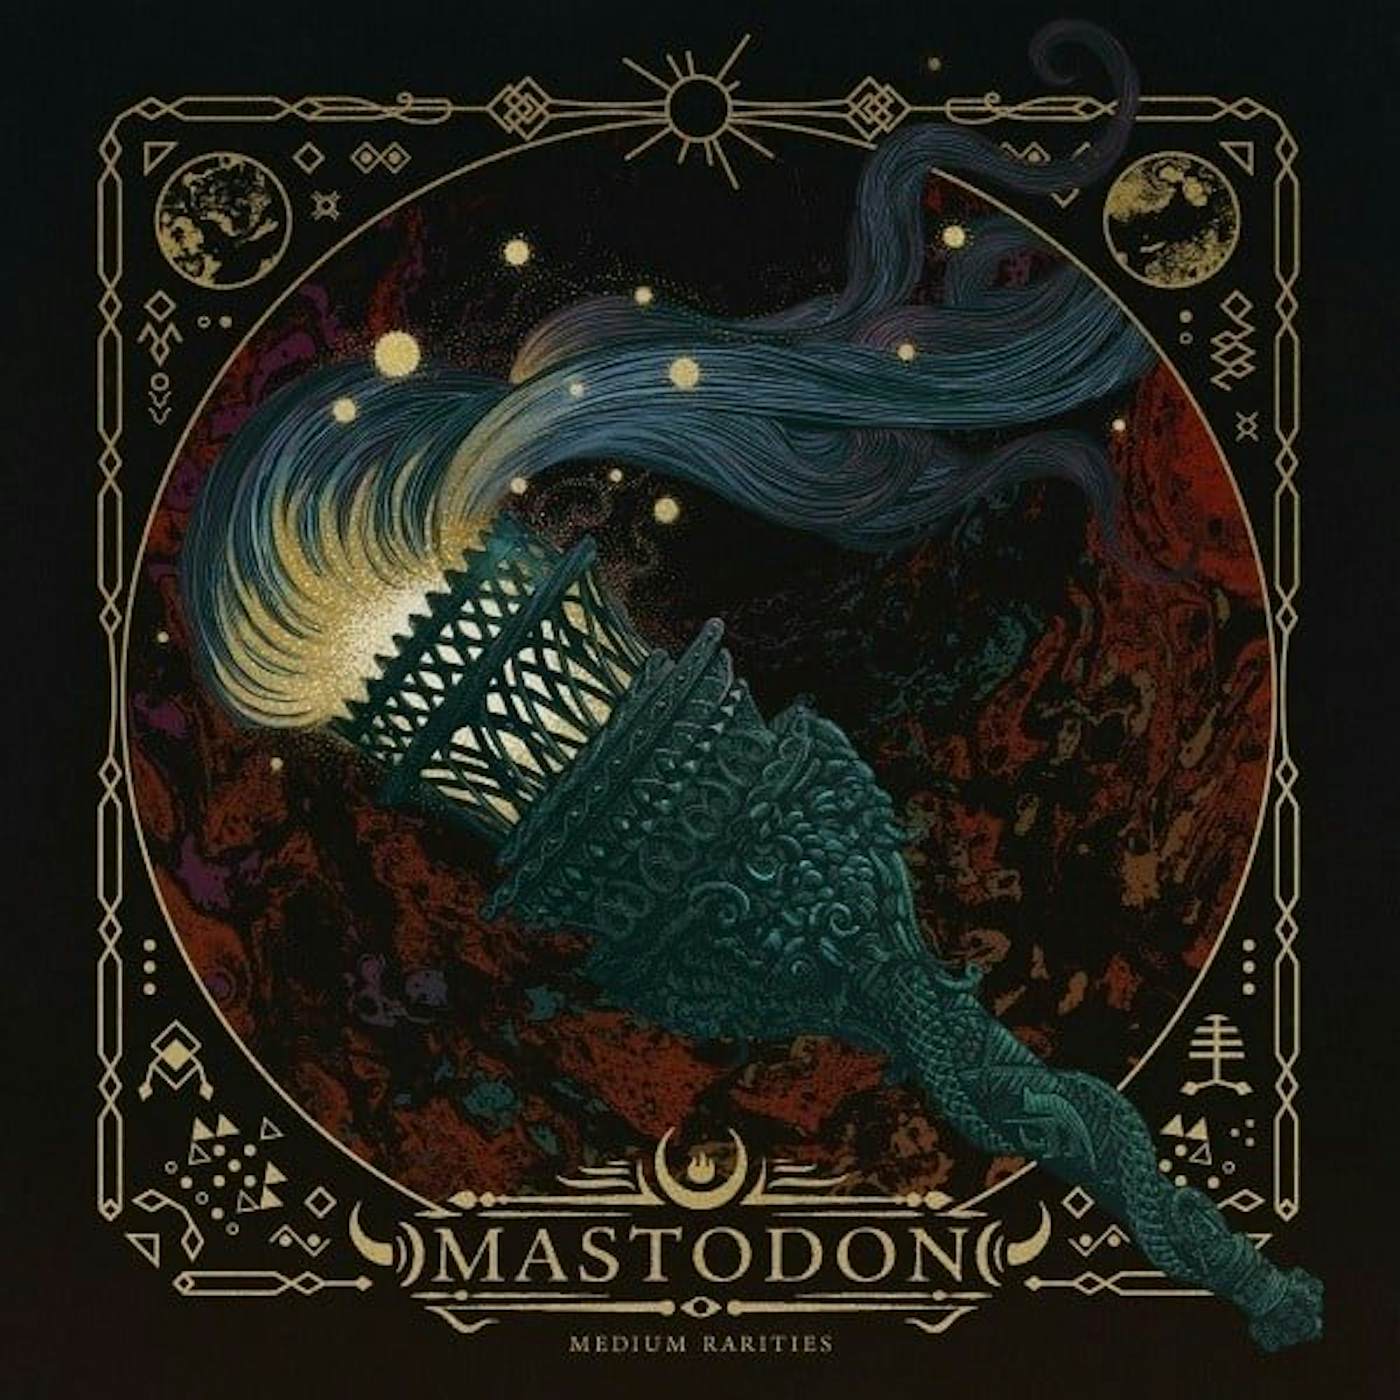 Mastodon Medium Rarities Vinyl Record